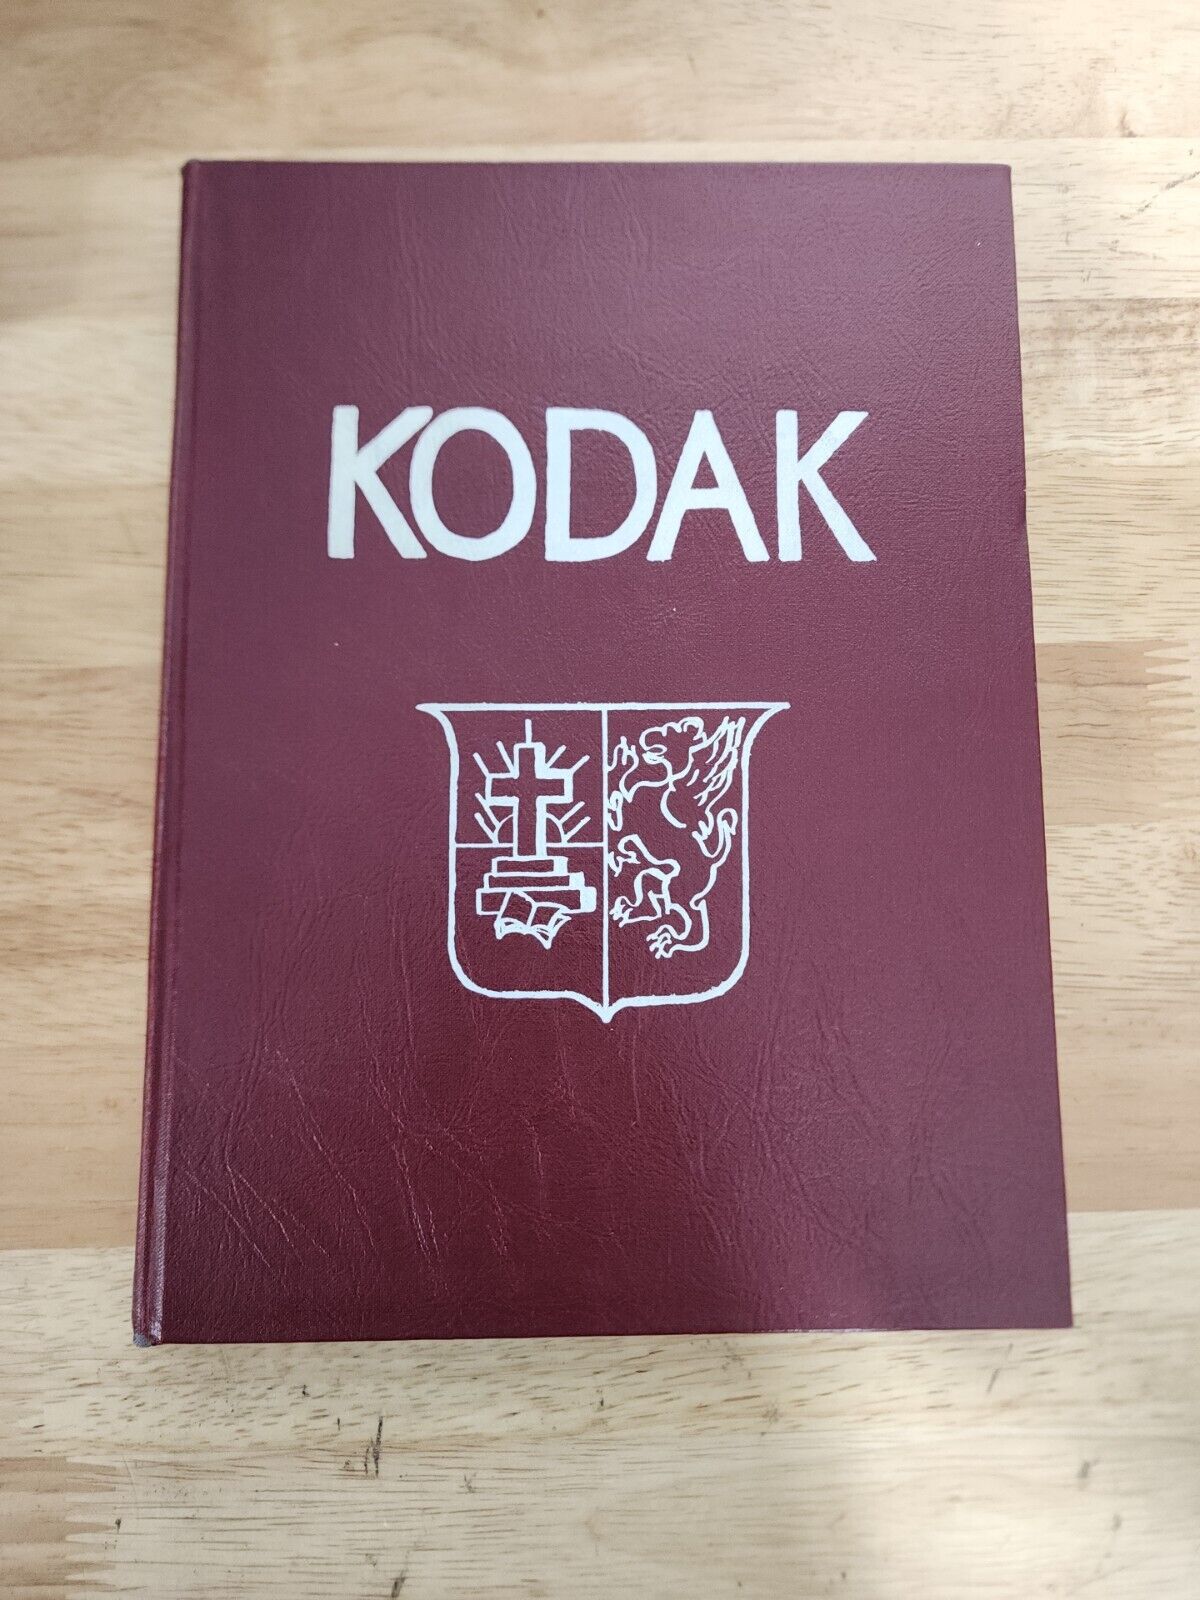 KODAK Kemper Hall-Kenosha Wisconsin-1950 YEARBOOK-Vol 33